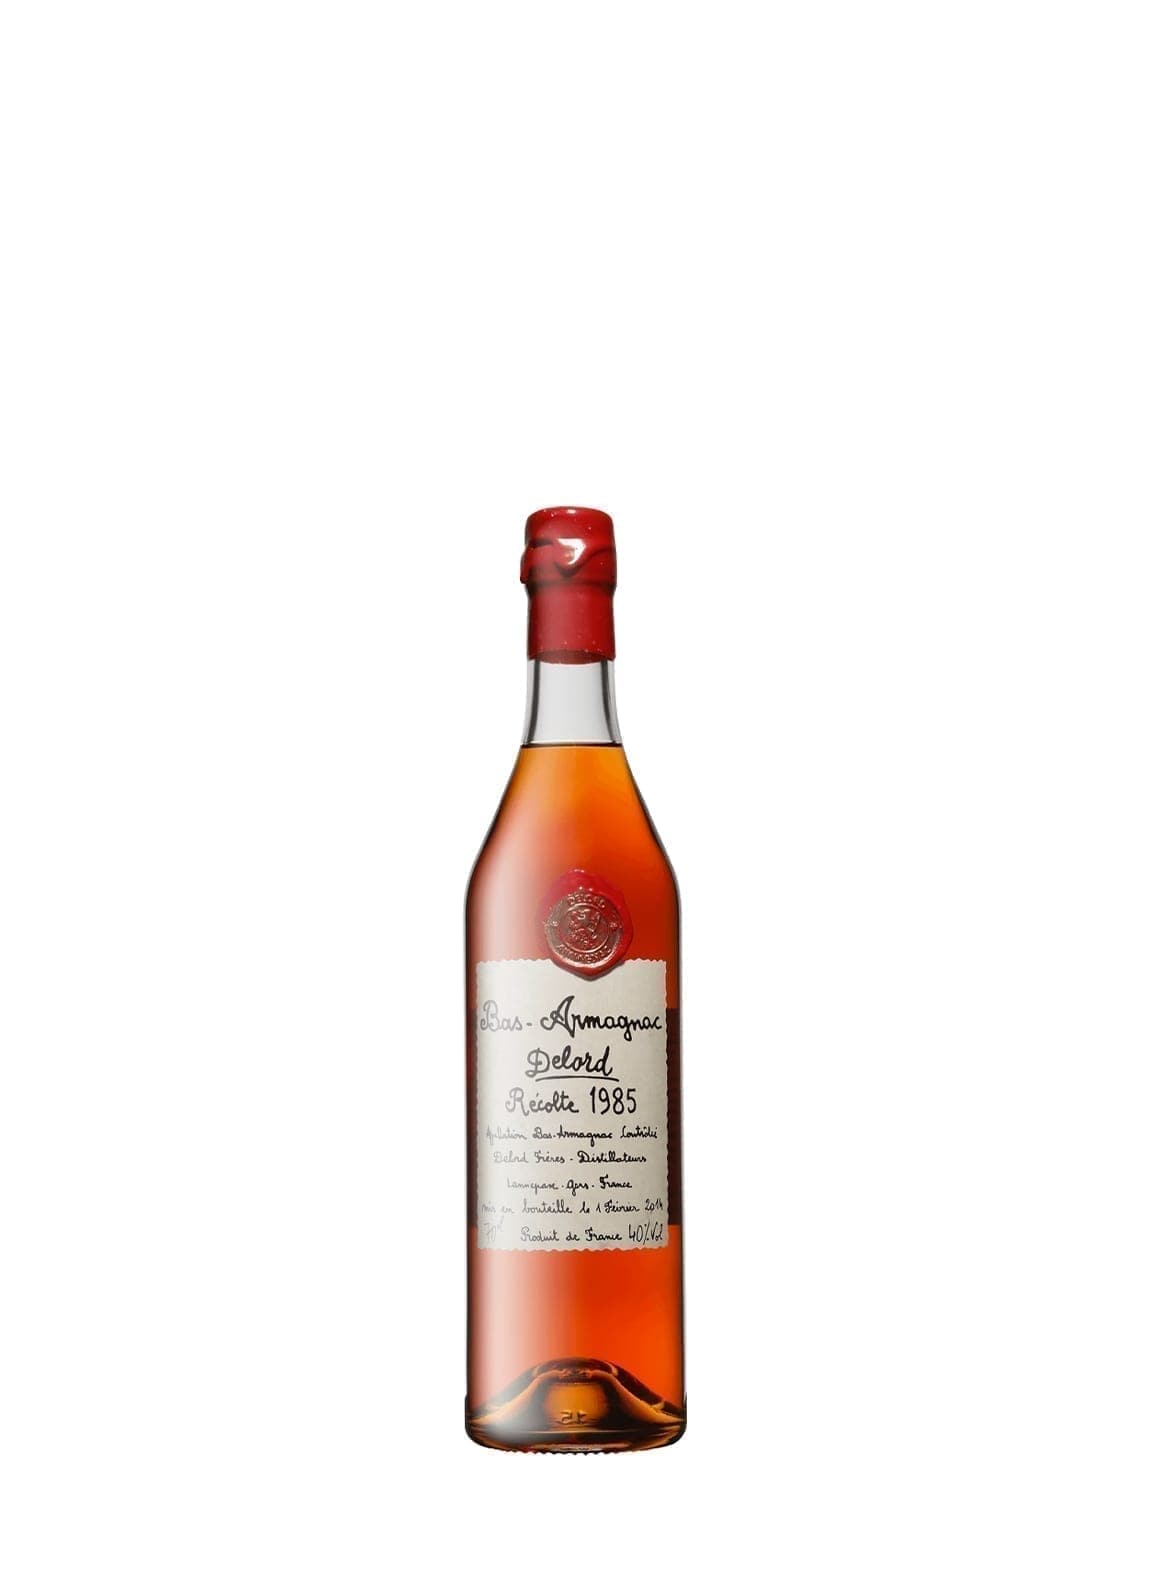 Delord 1985 Bas Armagnac 40% 50ml | Brandy | Shop online at Spirits of France